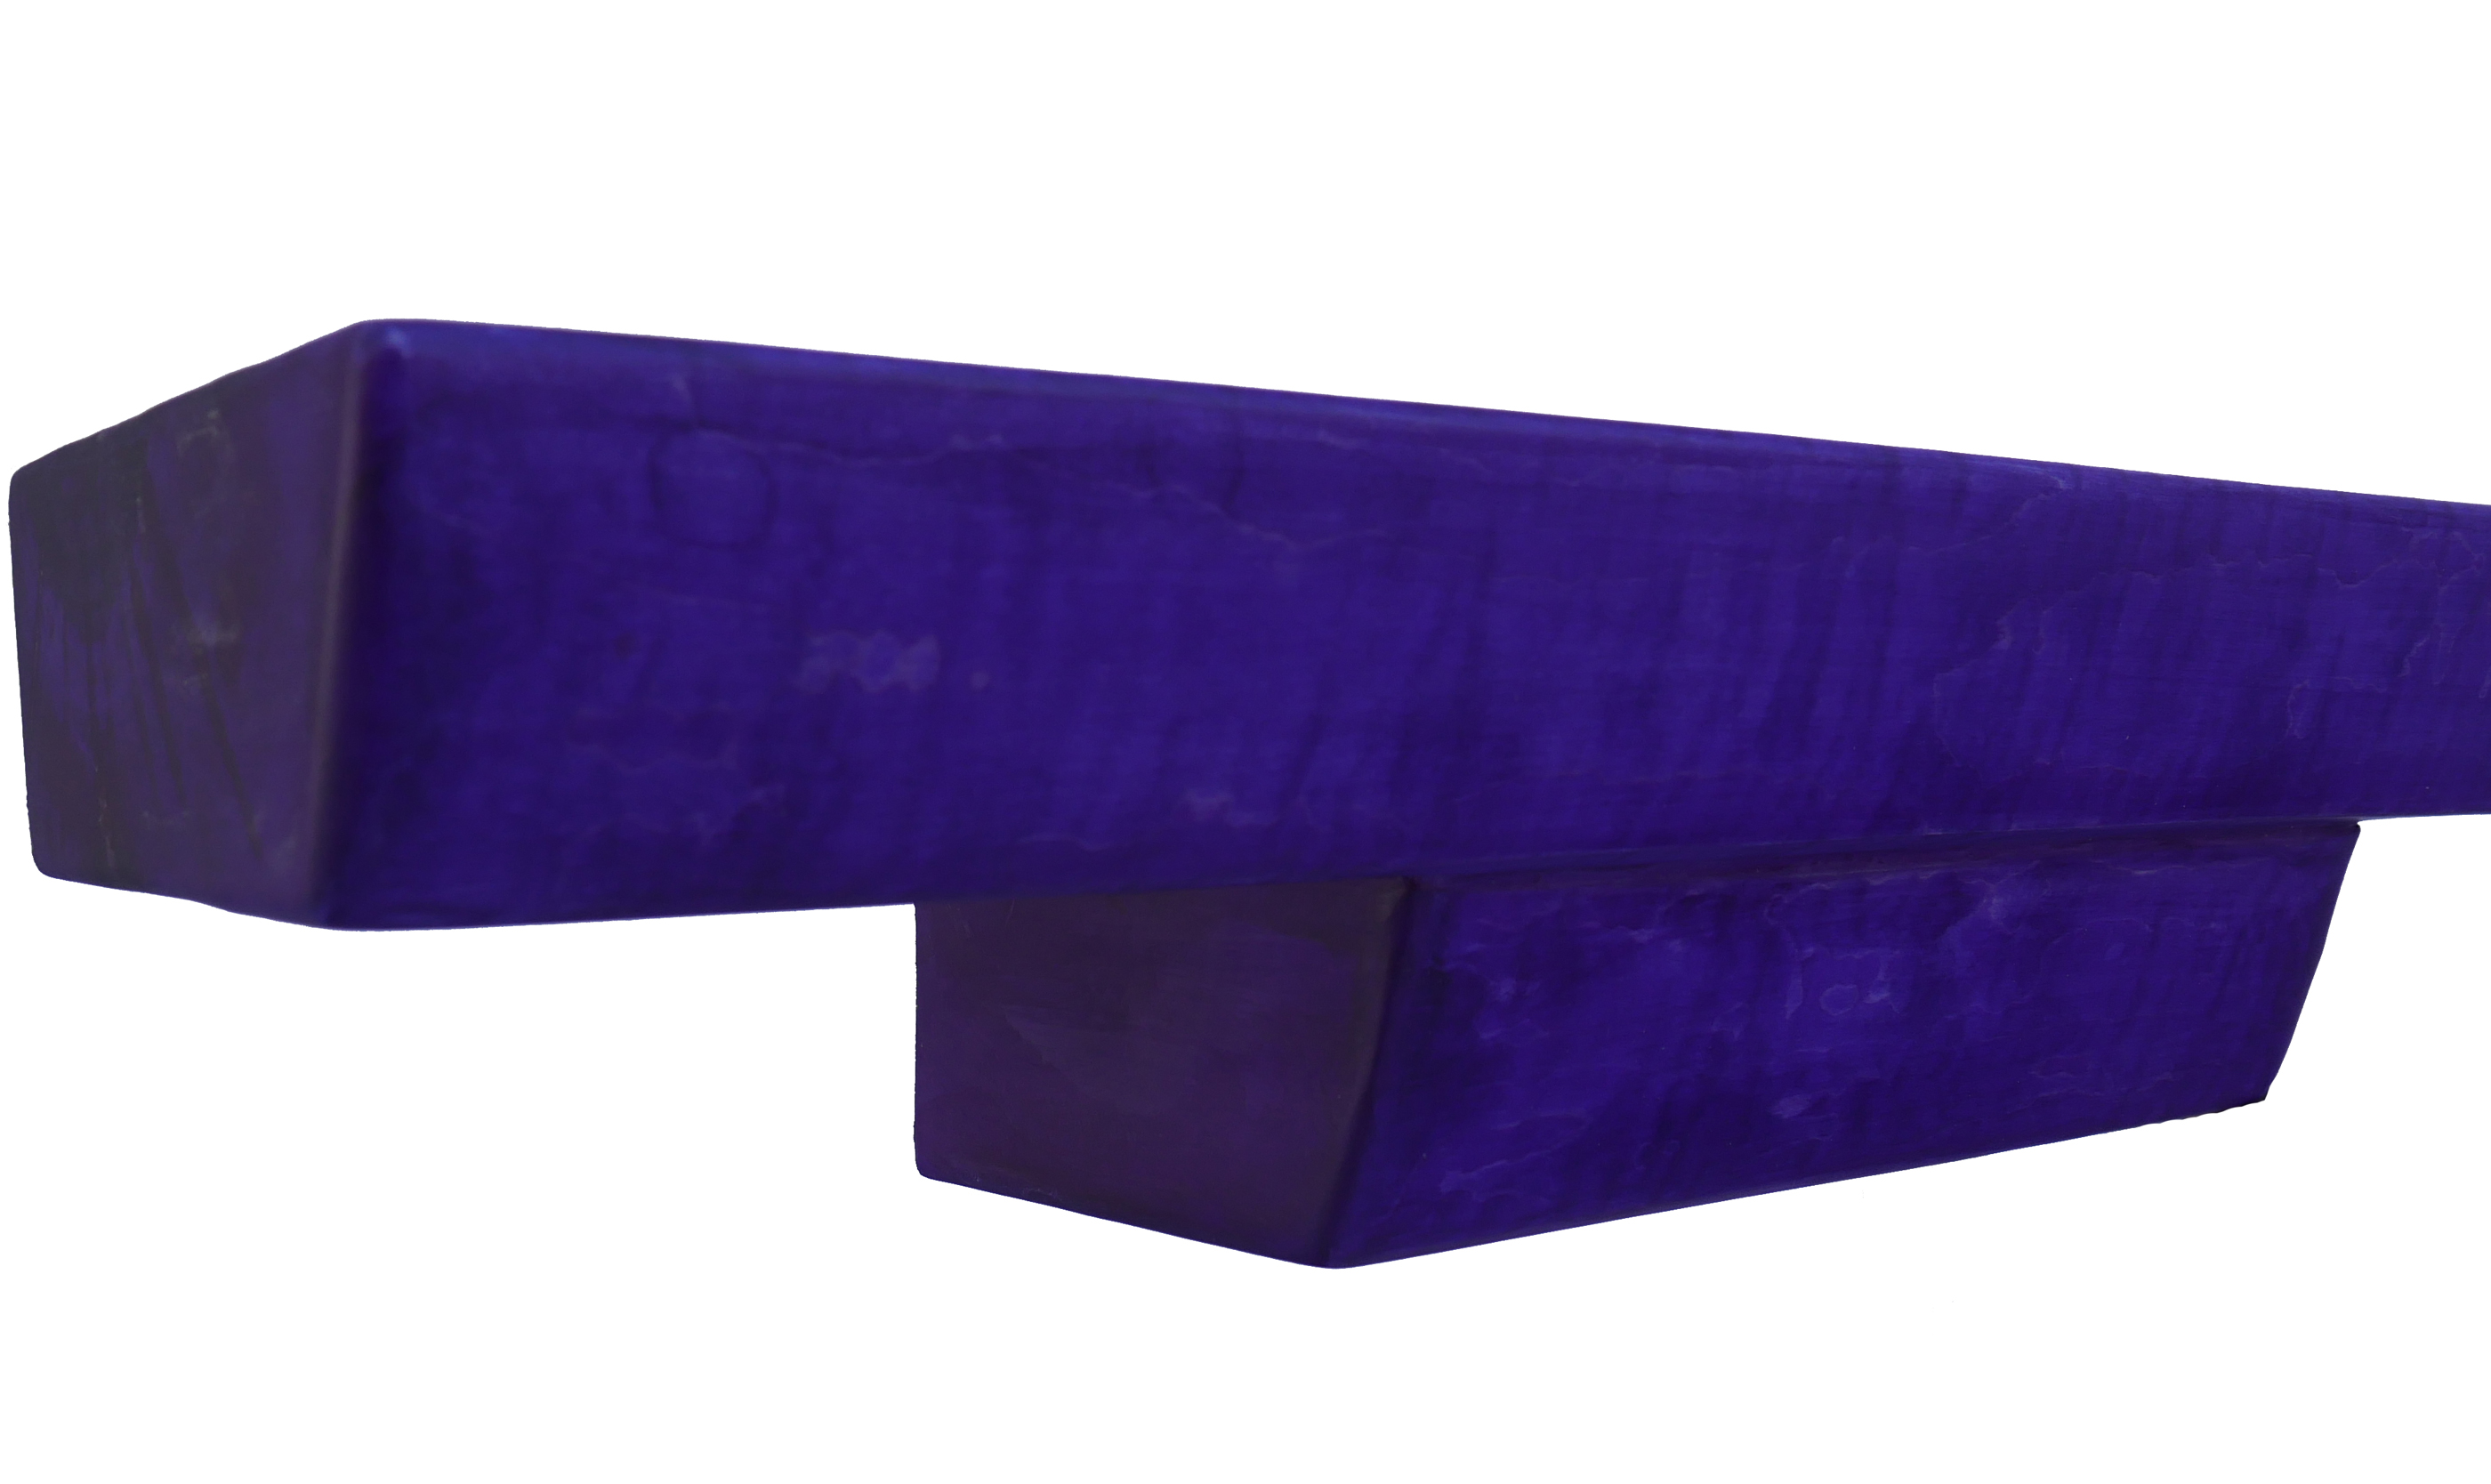 Purple figured maple wood fireplace mantel